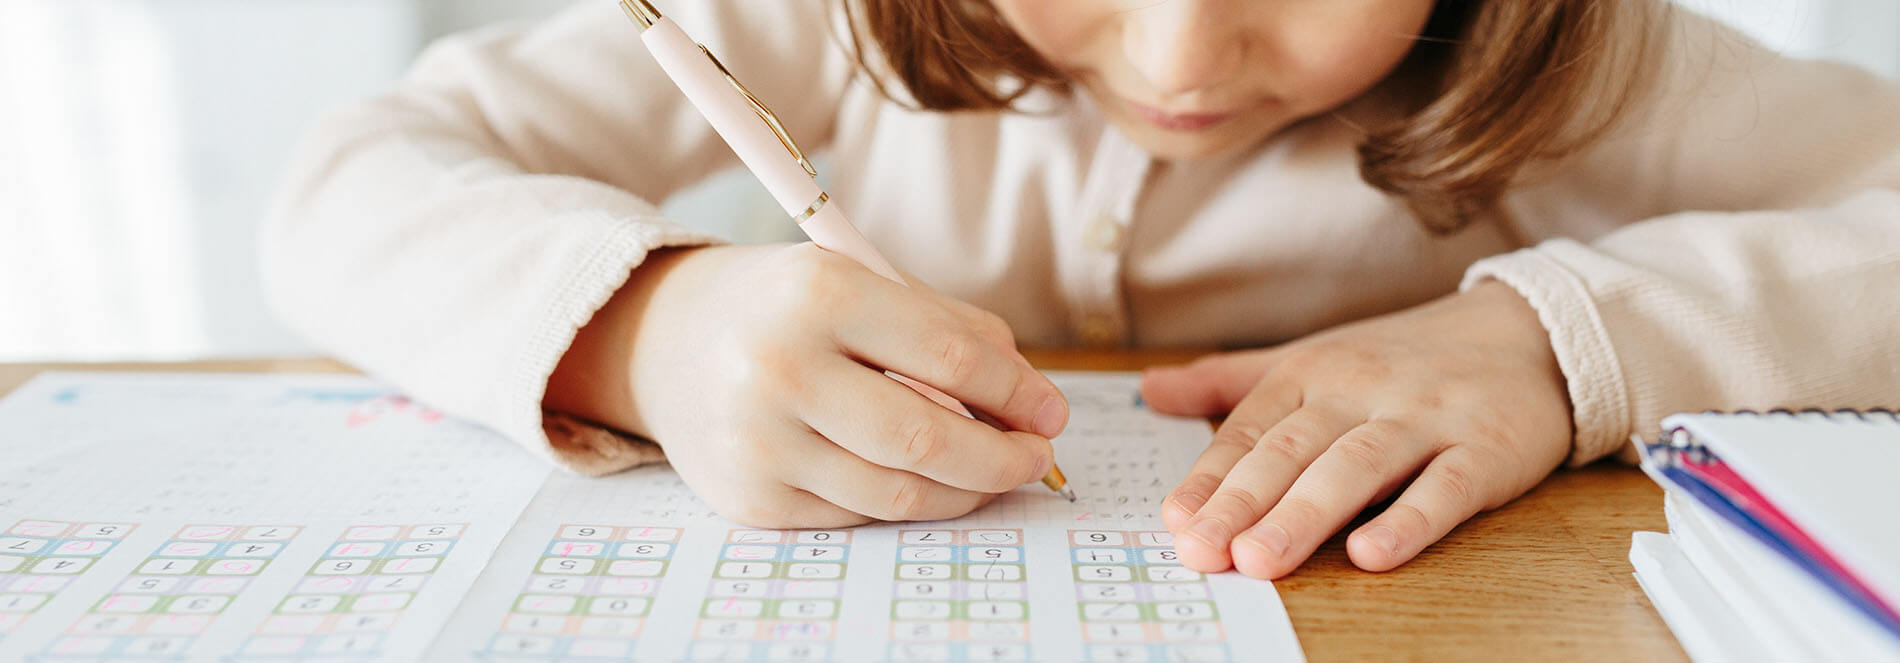 cute-preschooler-girl-writing-maths-learning-home-2021-09-01-19-42-43-utc